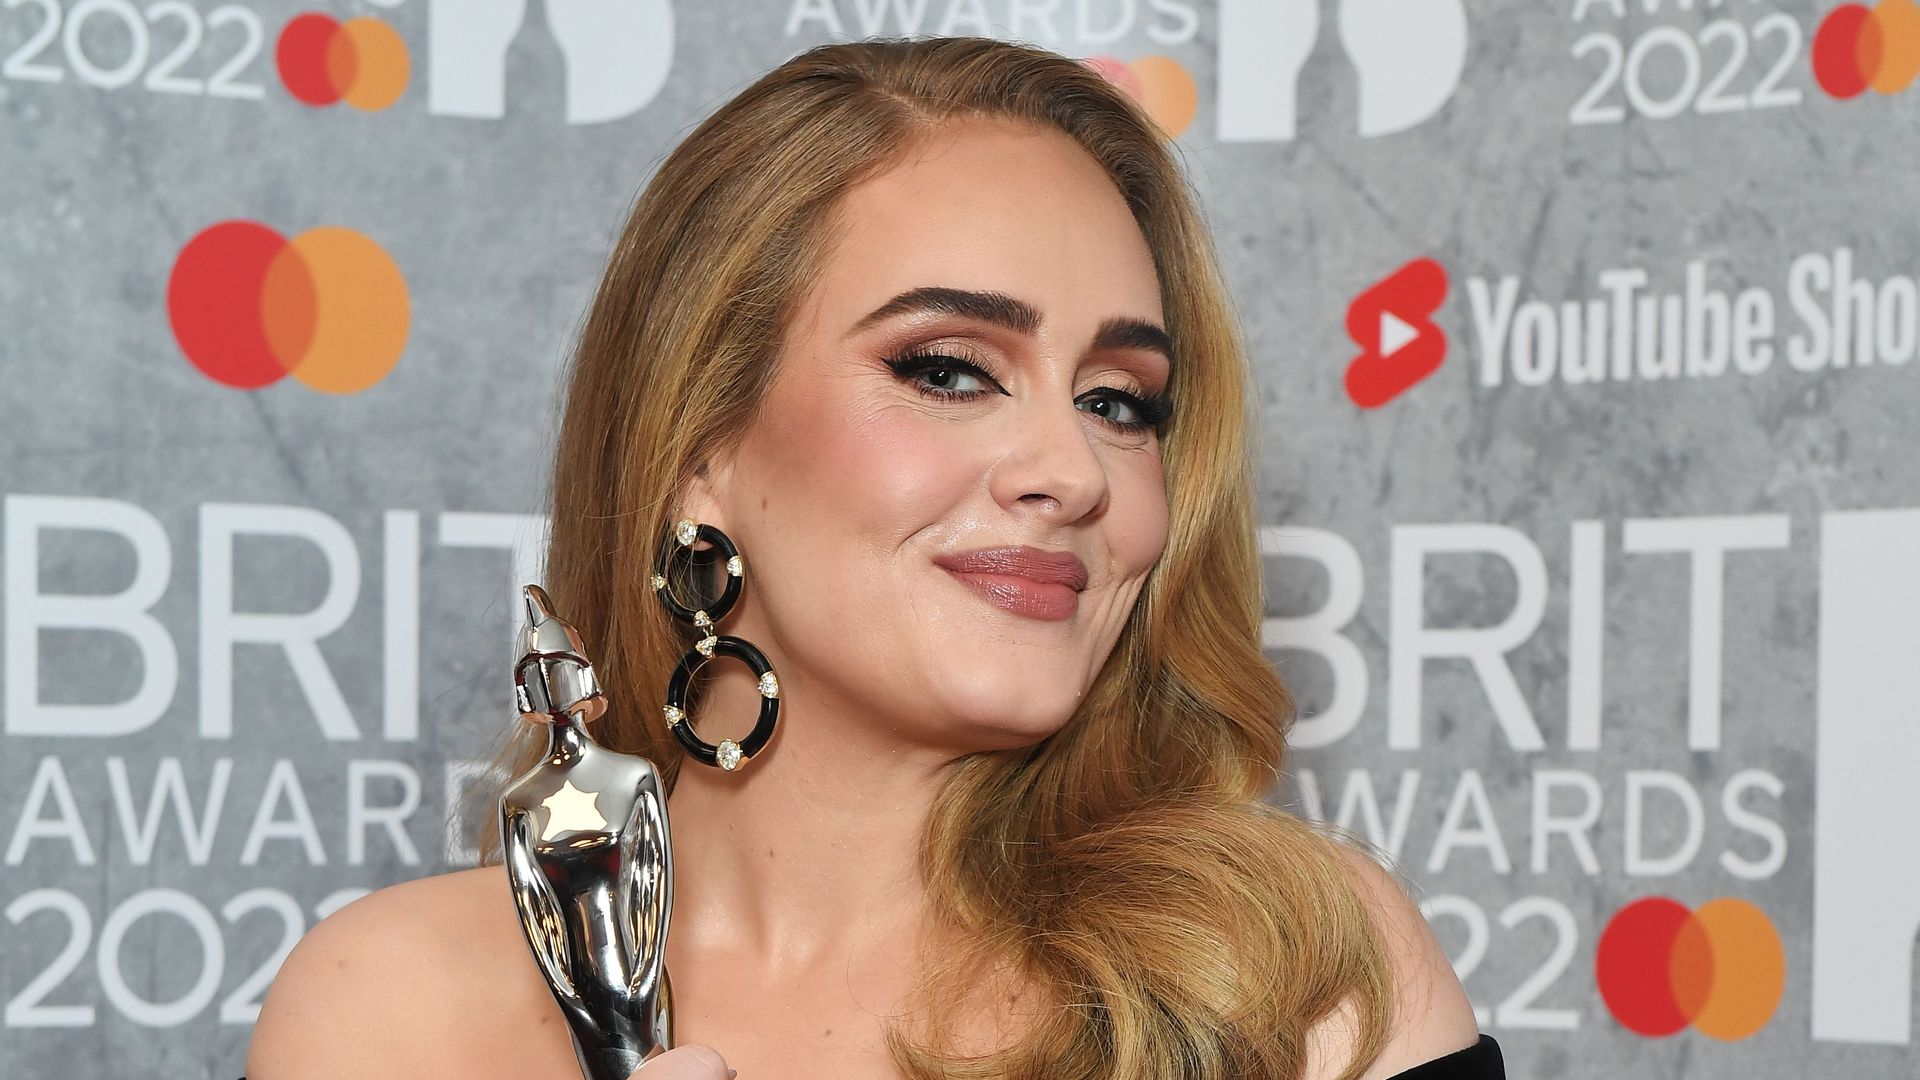 Adele holding awards in a black dress